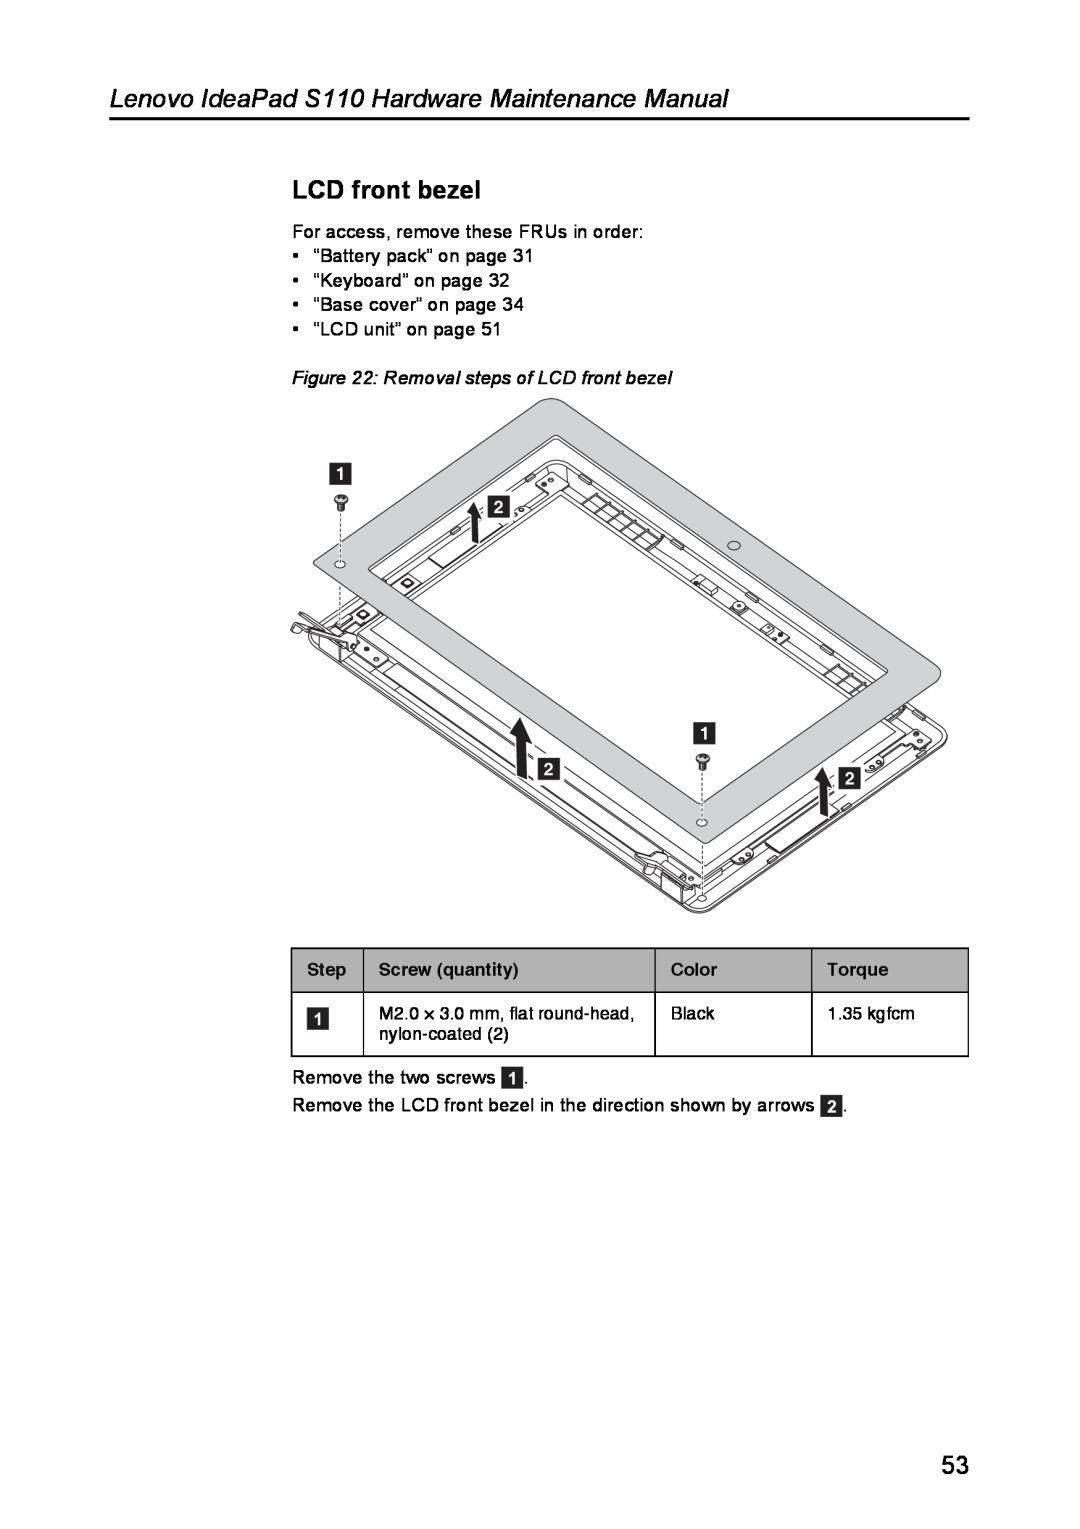 Lenovo Removal steps of LCD front bezel, Lenovo IdeaPad S110 Hardware Maintenance Manual, Step, Screw quantity 